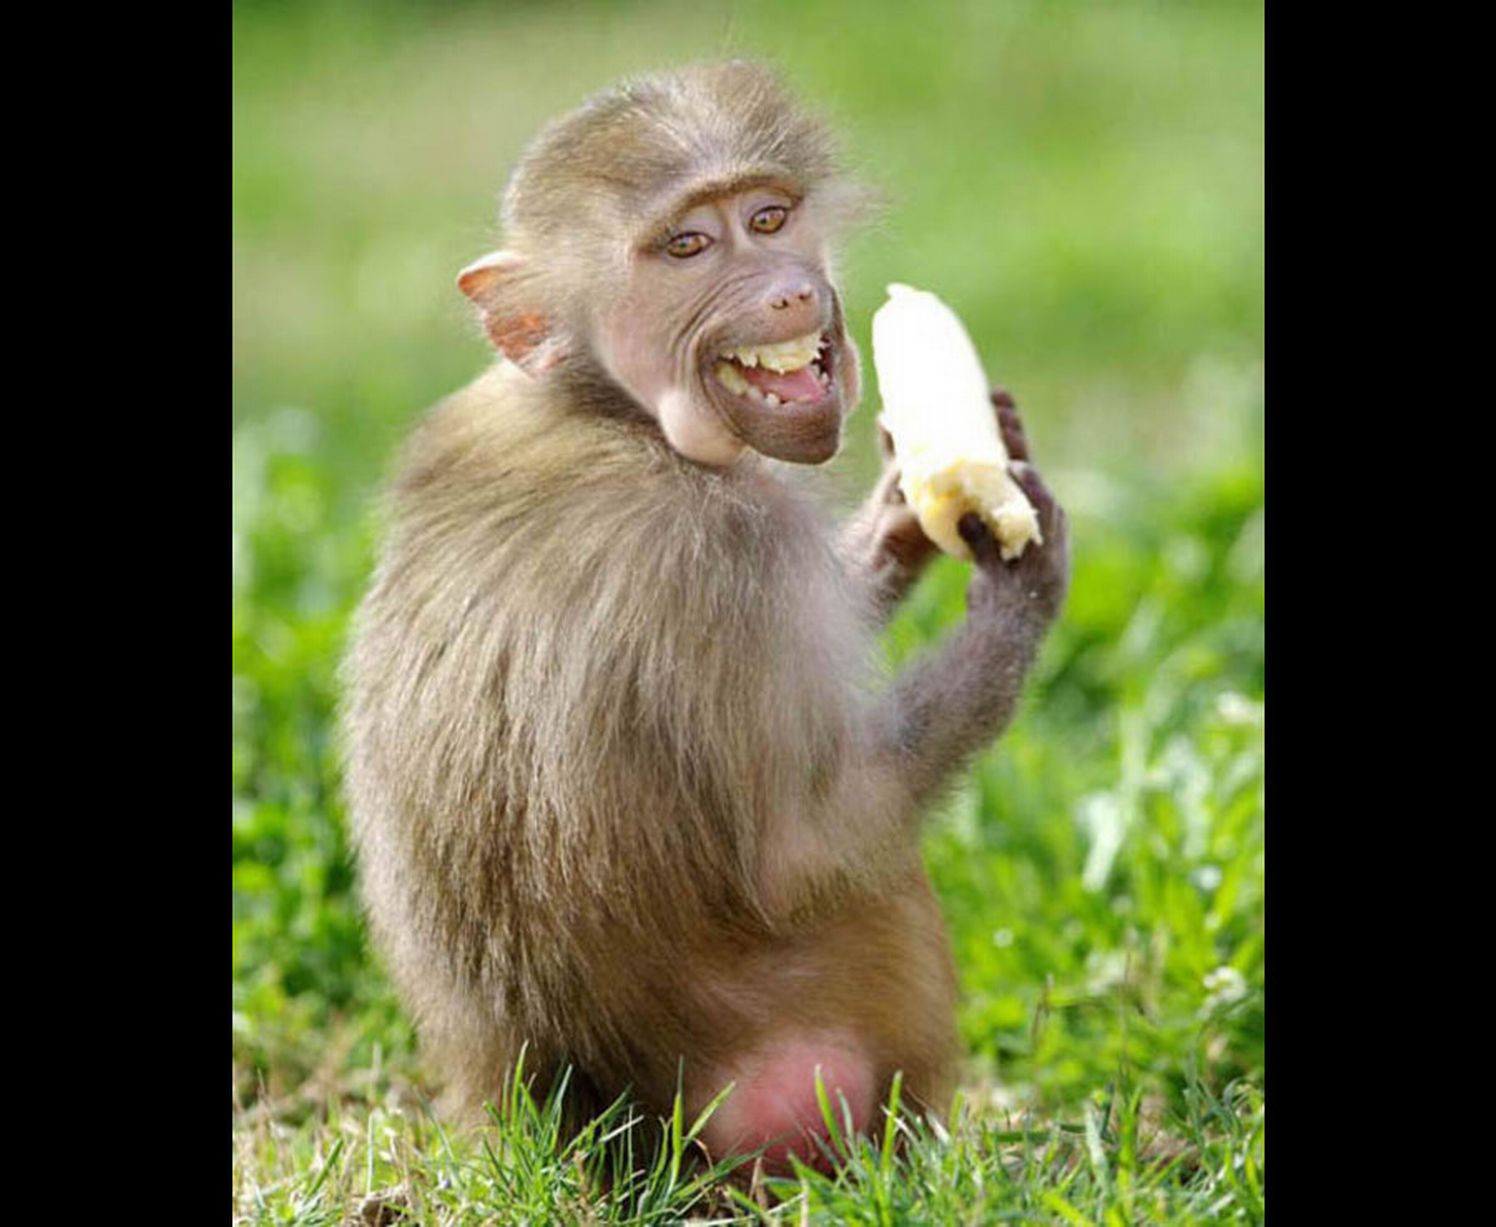 Cheeky monkey stealing a banana